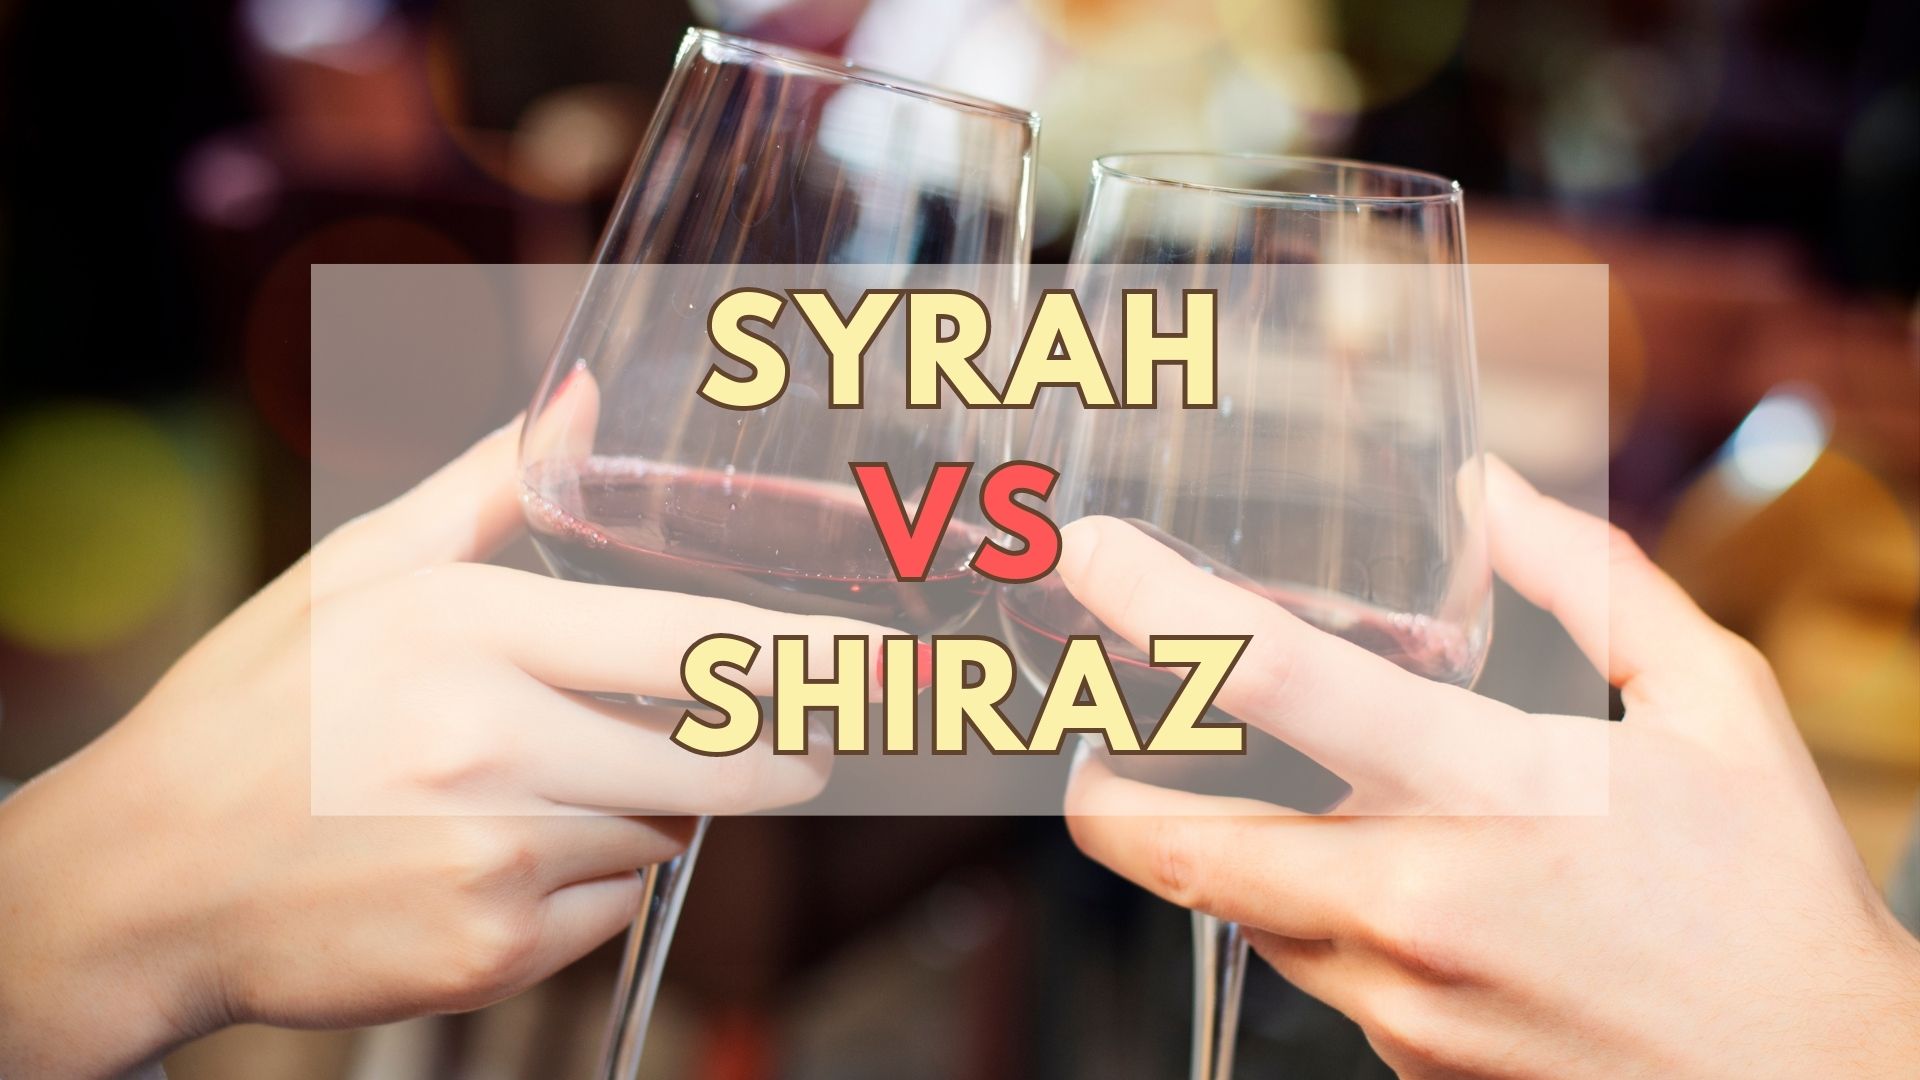 Syrah Vs Shiraz